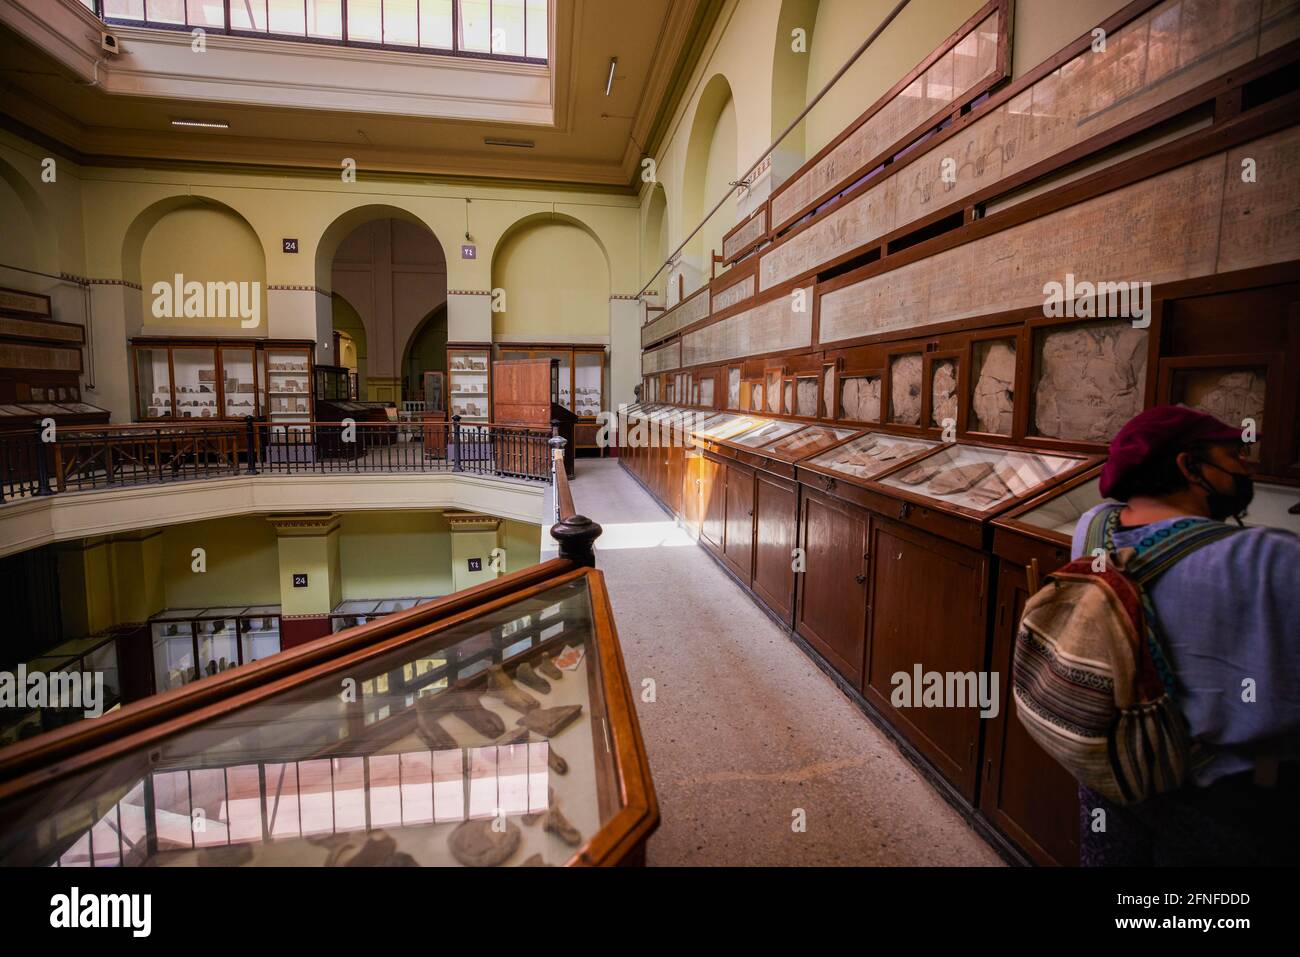 Cairo Egypt - April 13, 2021. Egyptian Museum, various exhibits. Stock Photo